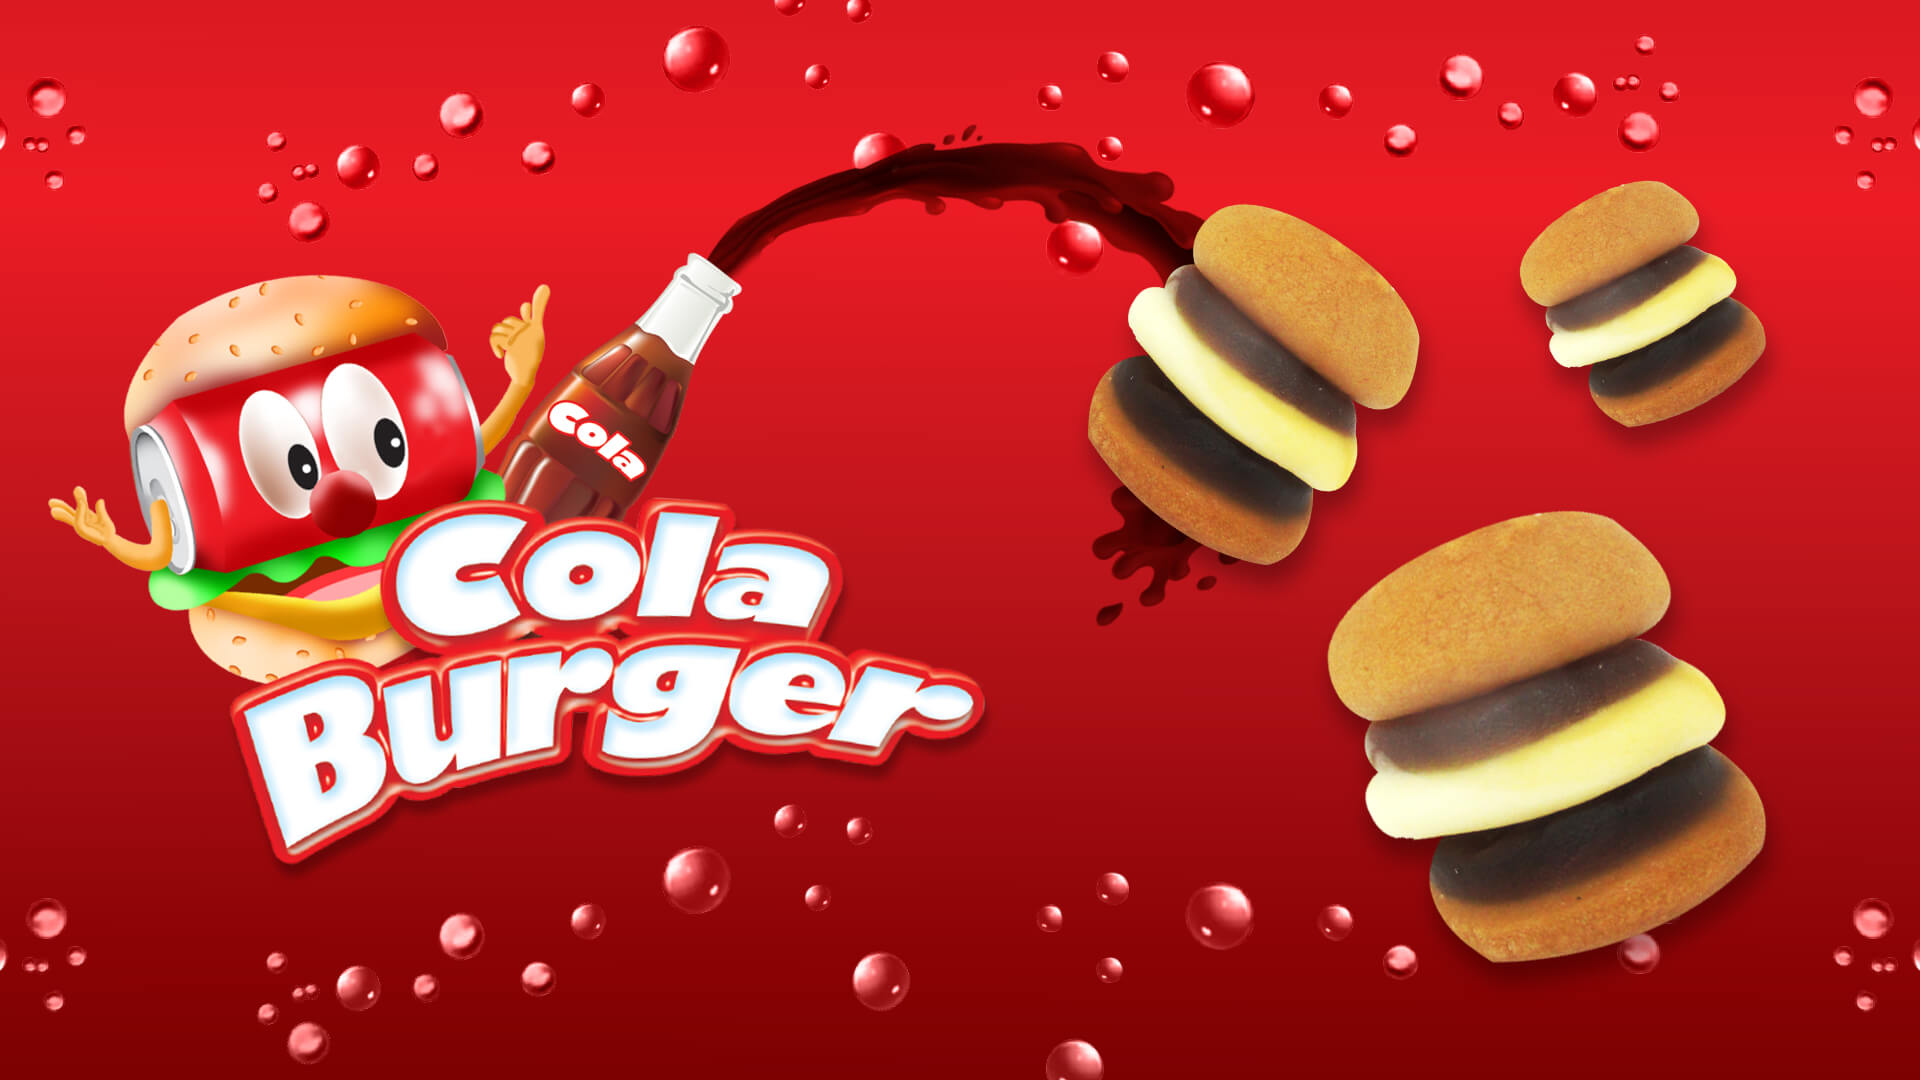 Cola Burger